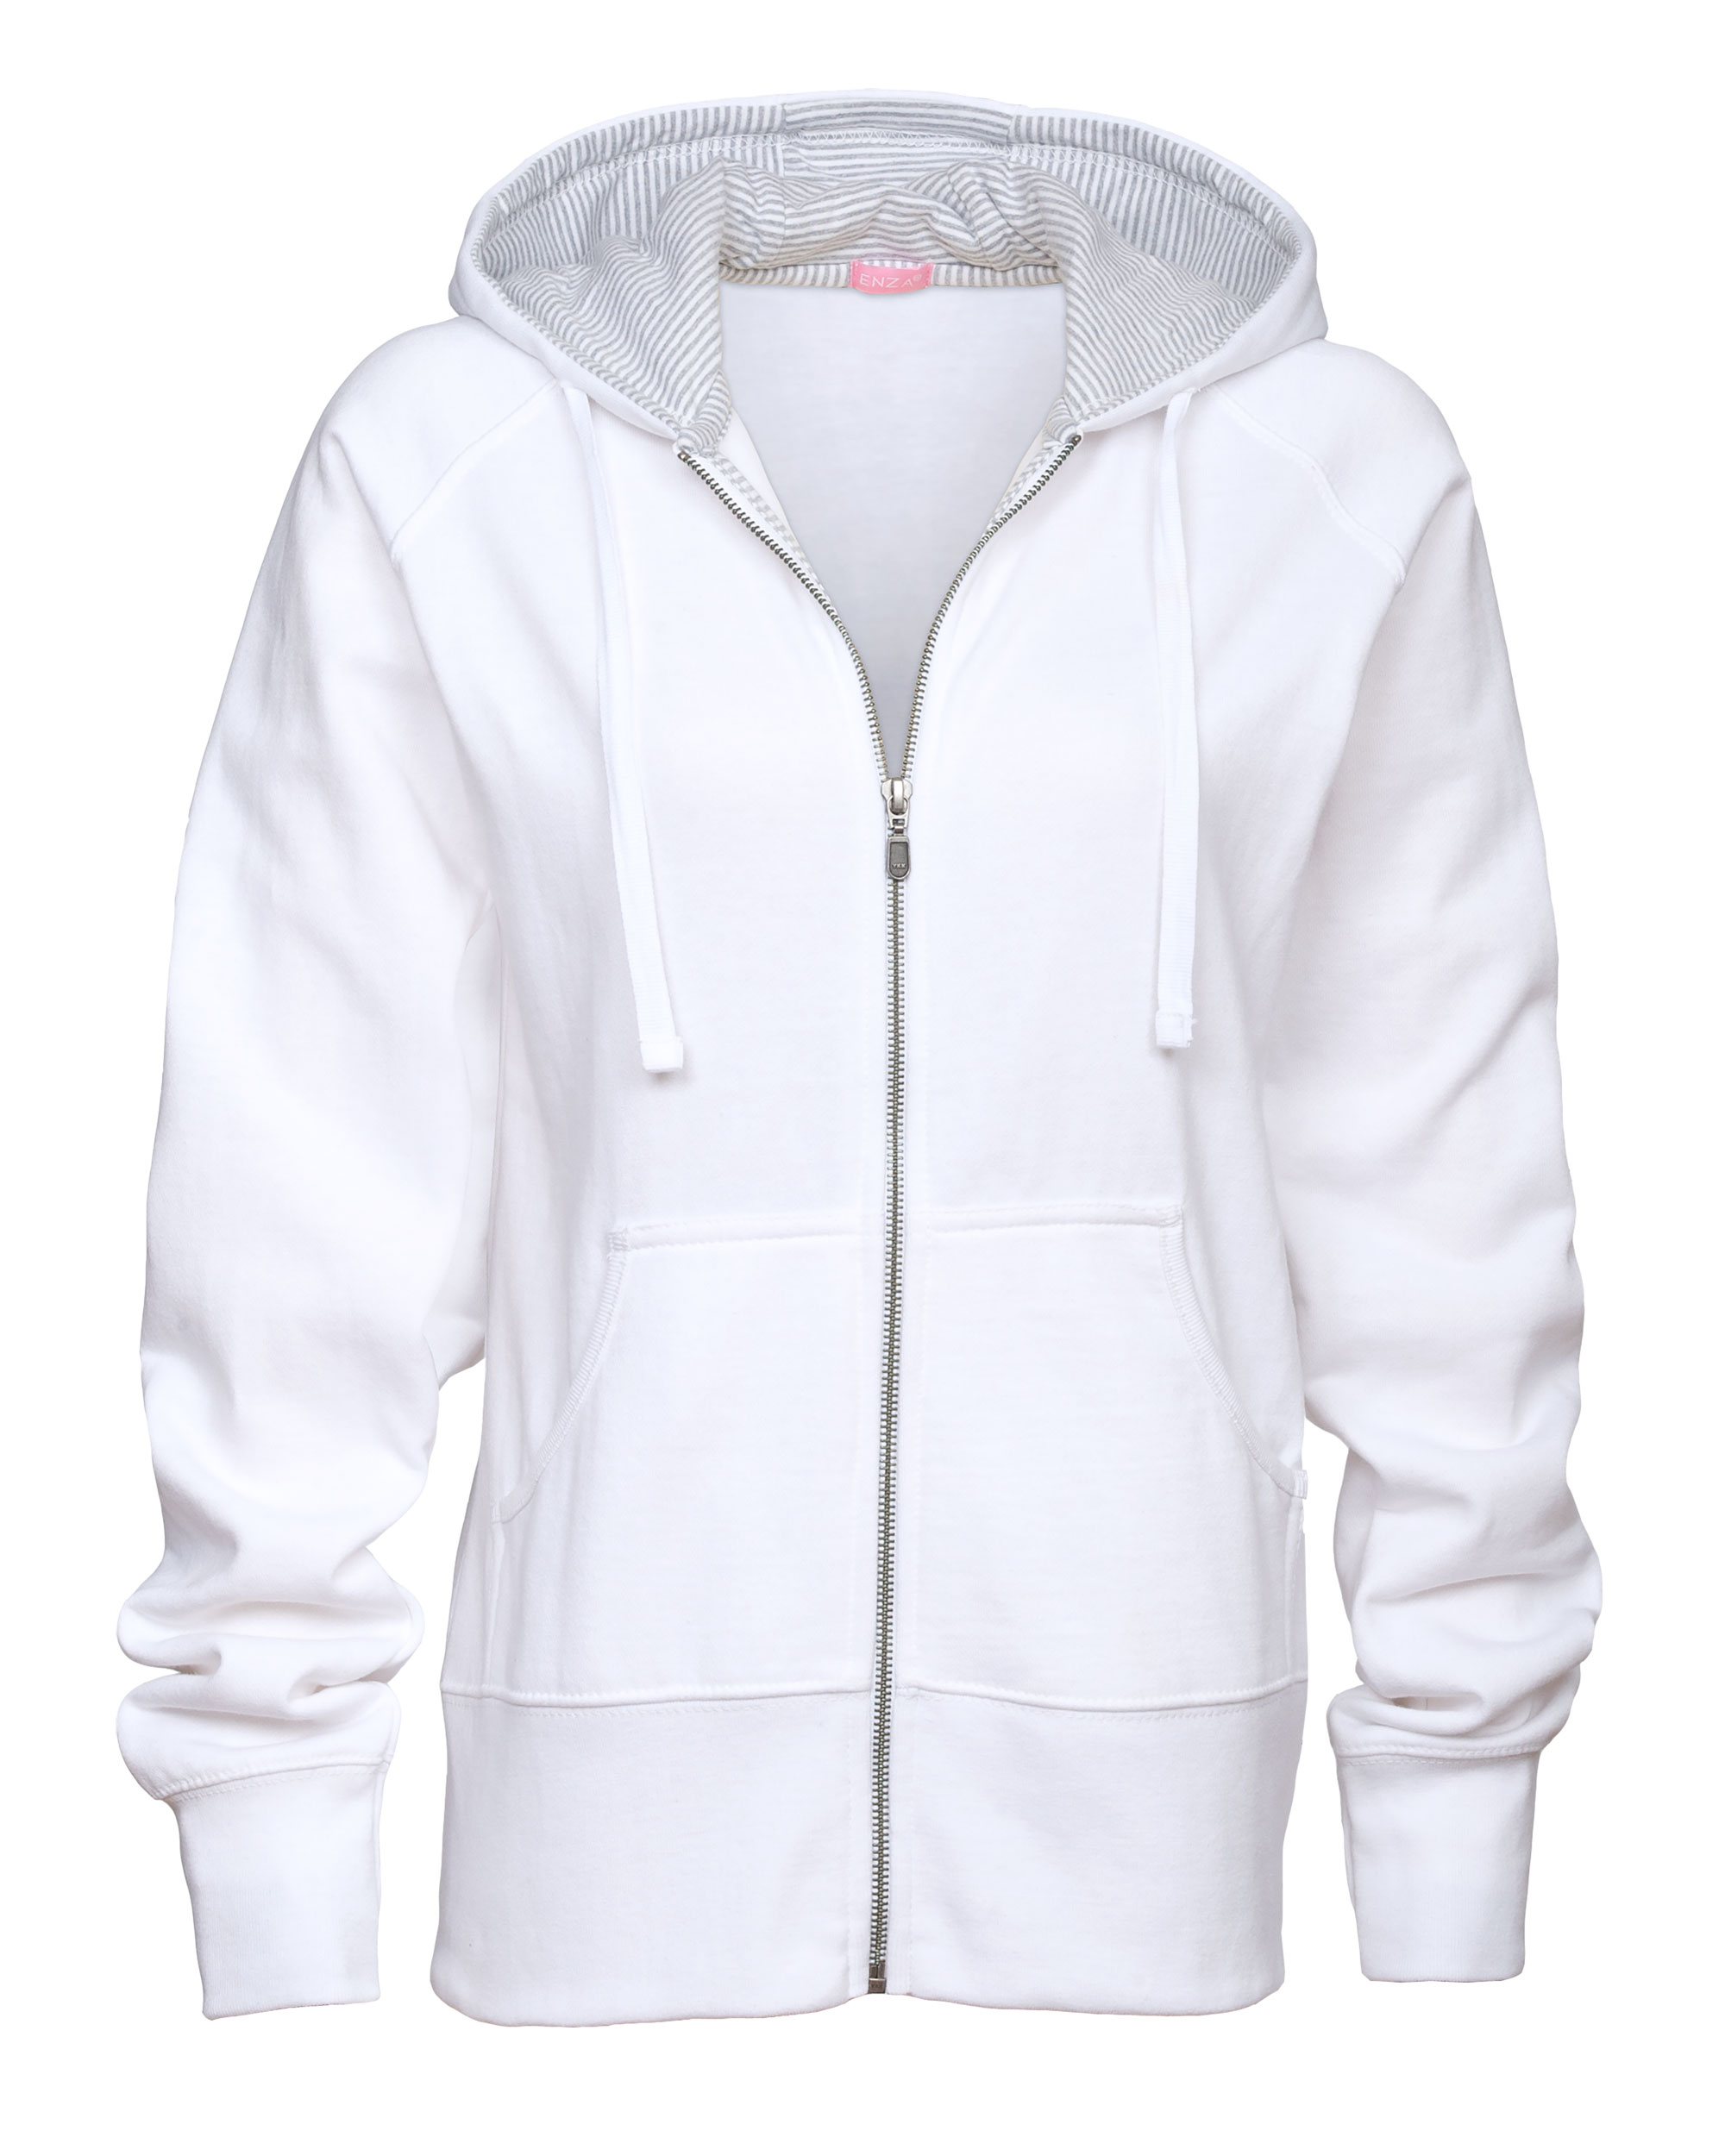 Enza® 34279 Ladies Full Zip Fleece with Striped Lined Hood